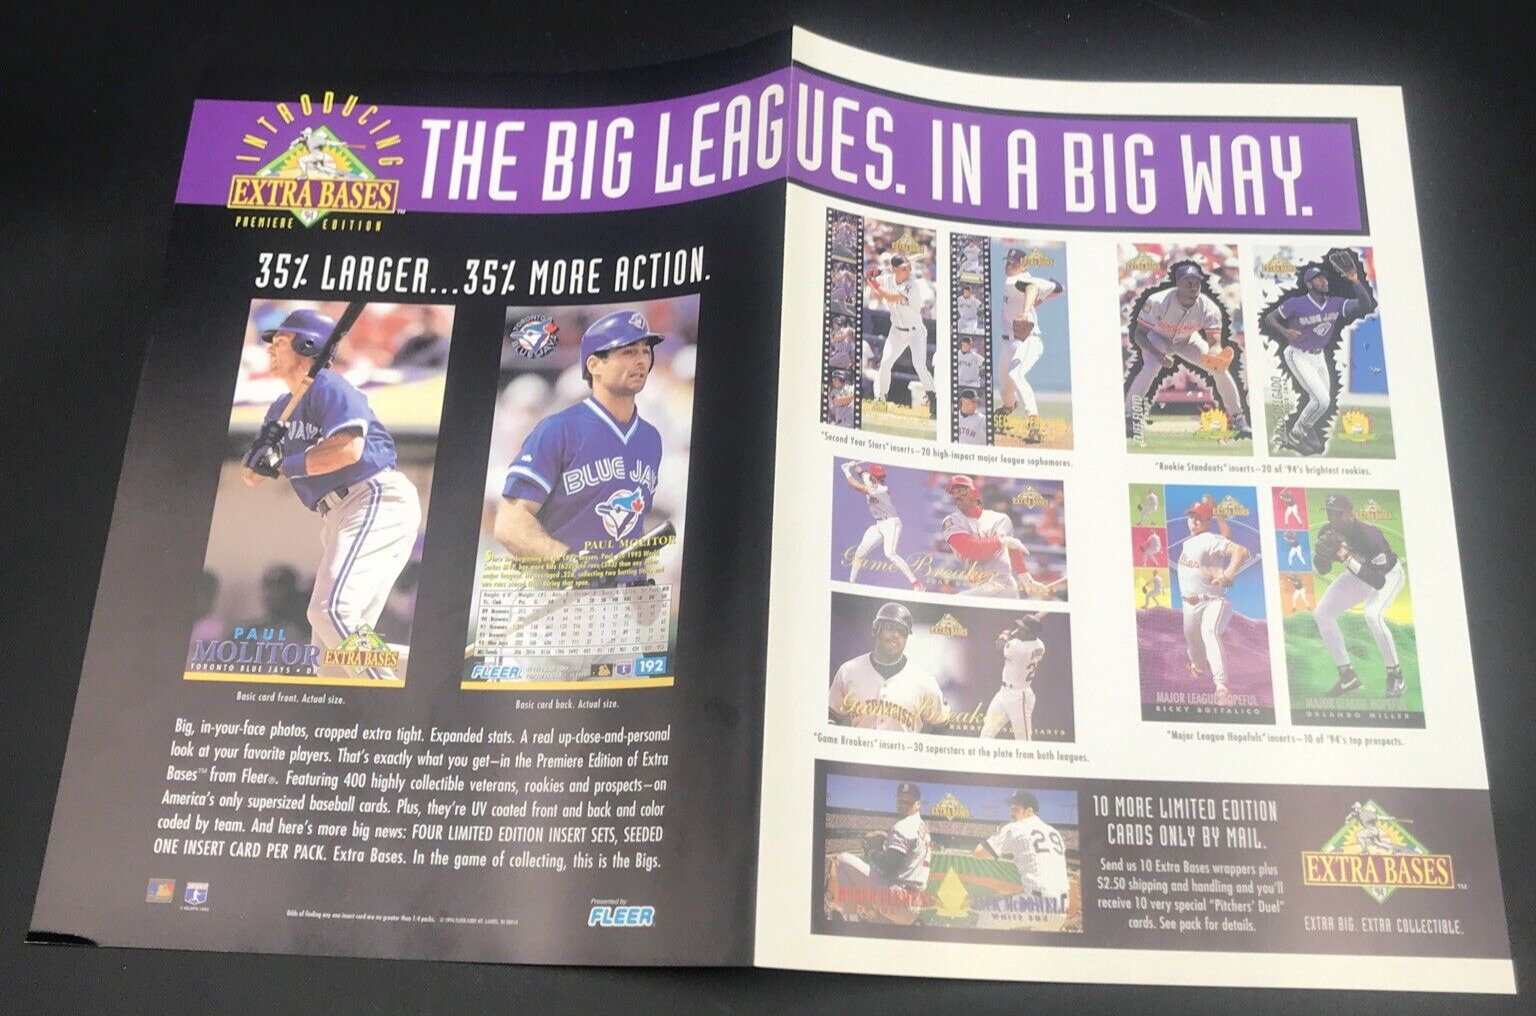 1994 Fleer Extra Bases MLB Baseball Sell Sheet Promo Ad Flyer Poster Molitor - $21.30